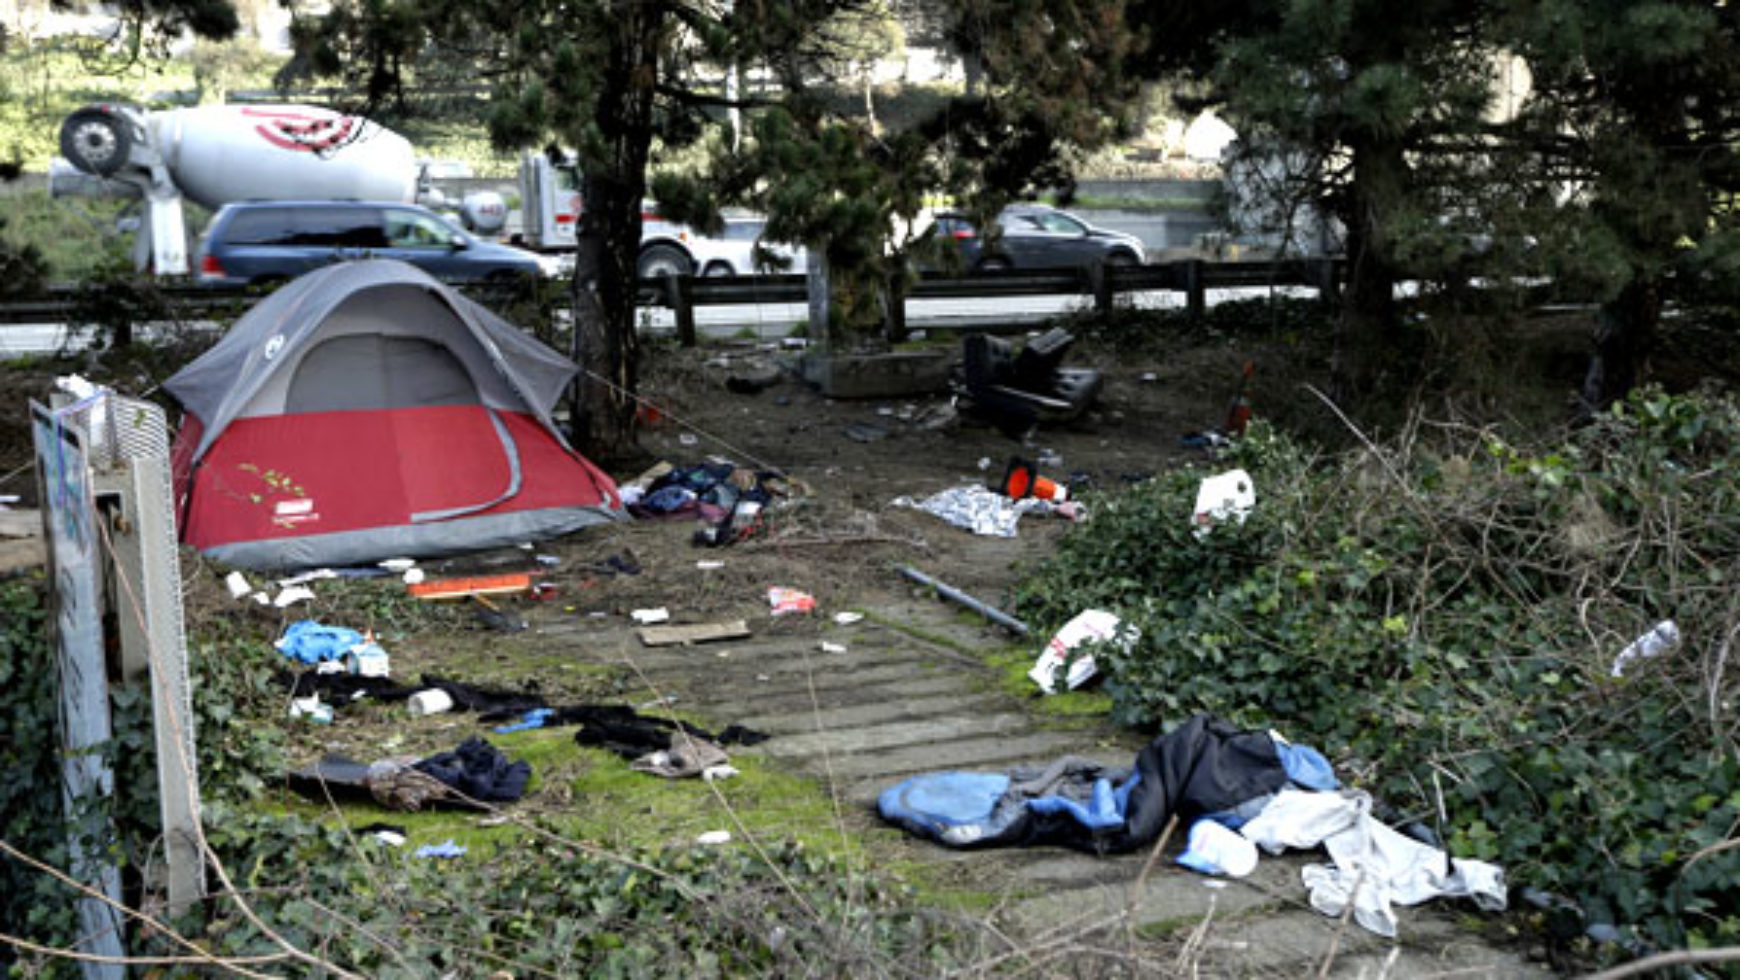 Seattle’s homeless crisis demands accountability